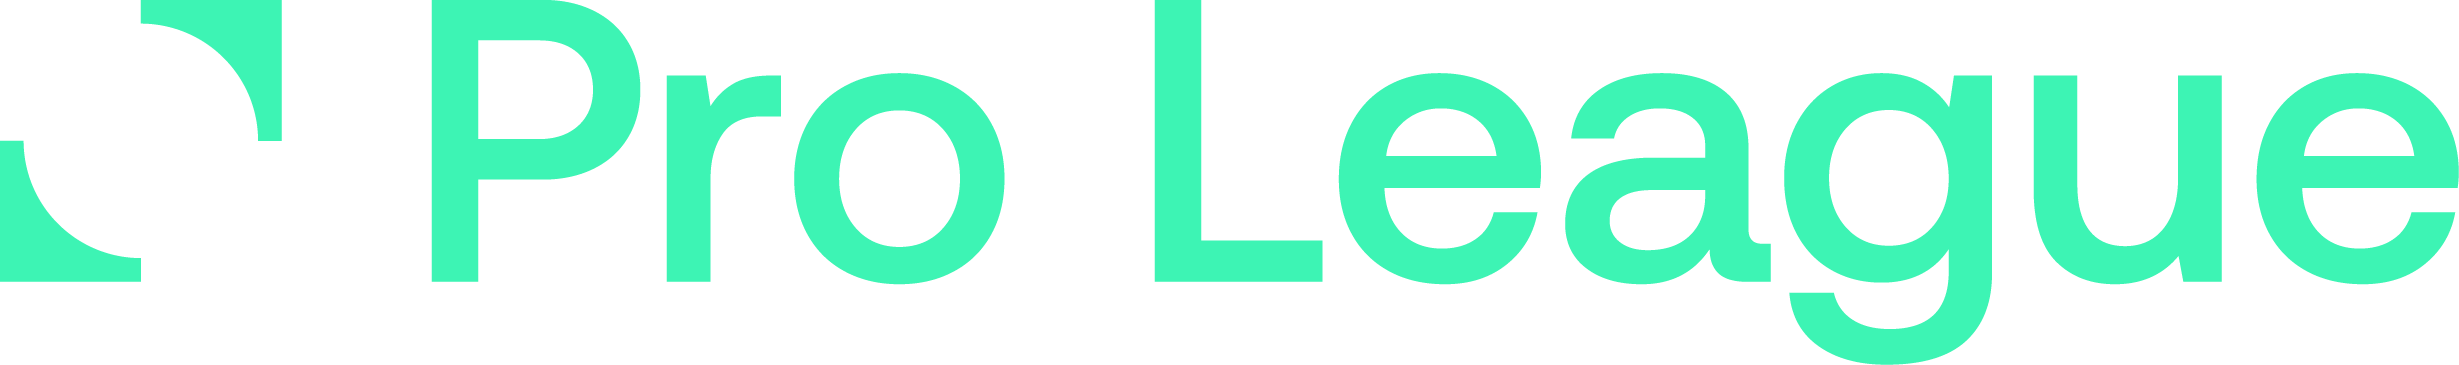 Pro League logo green